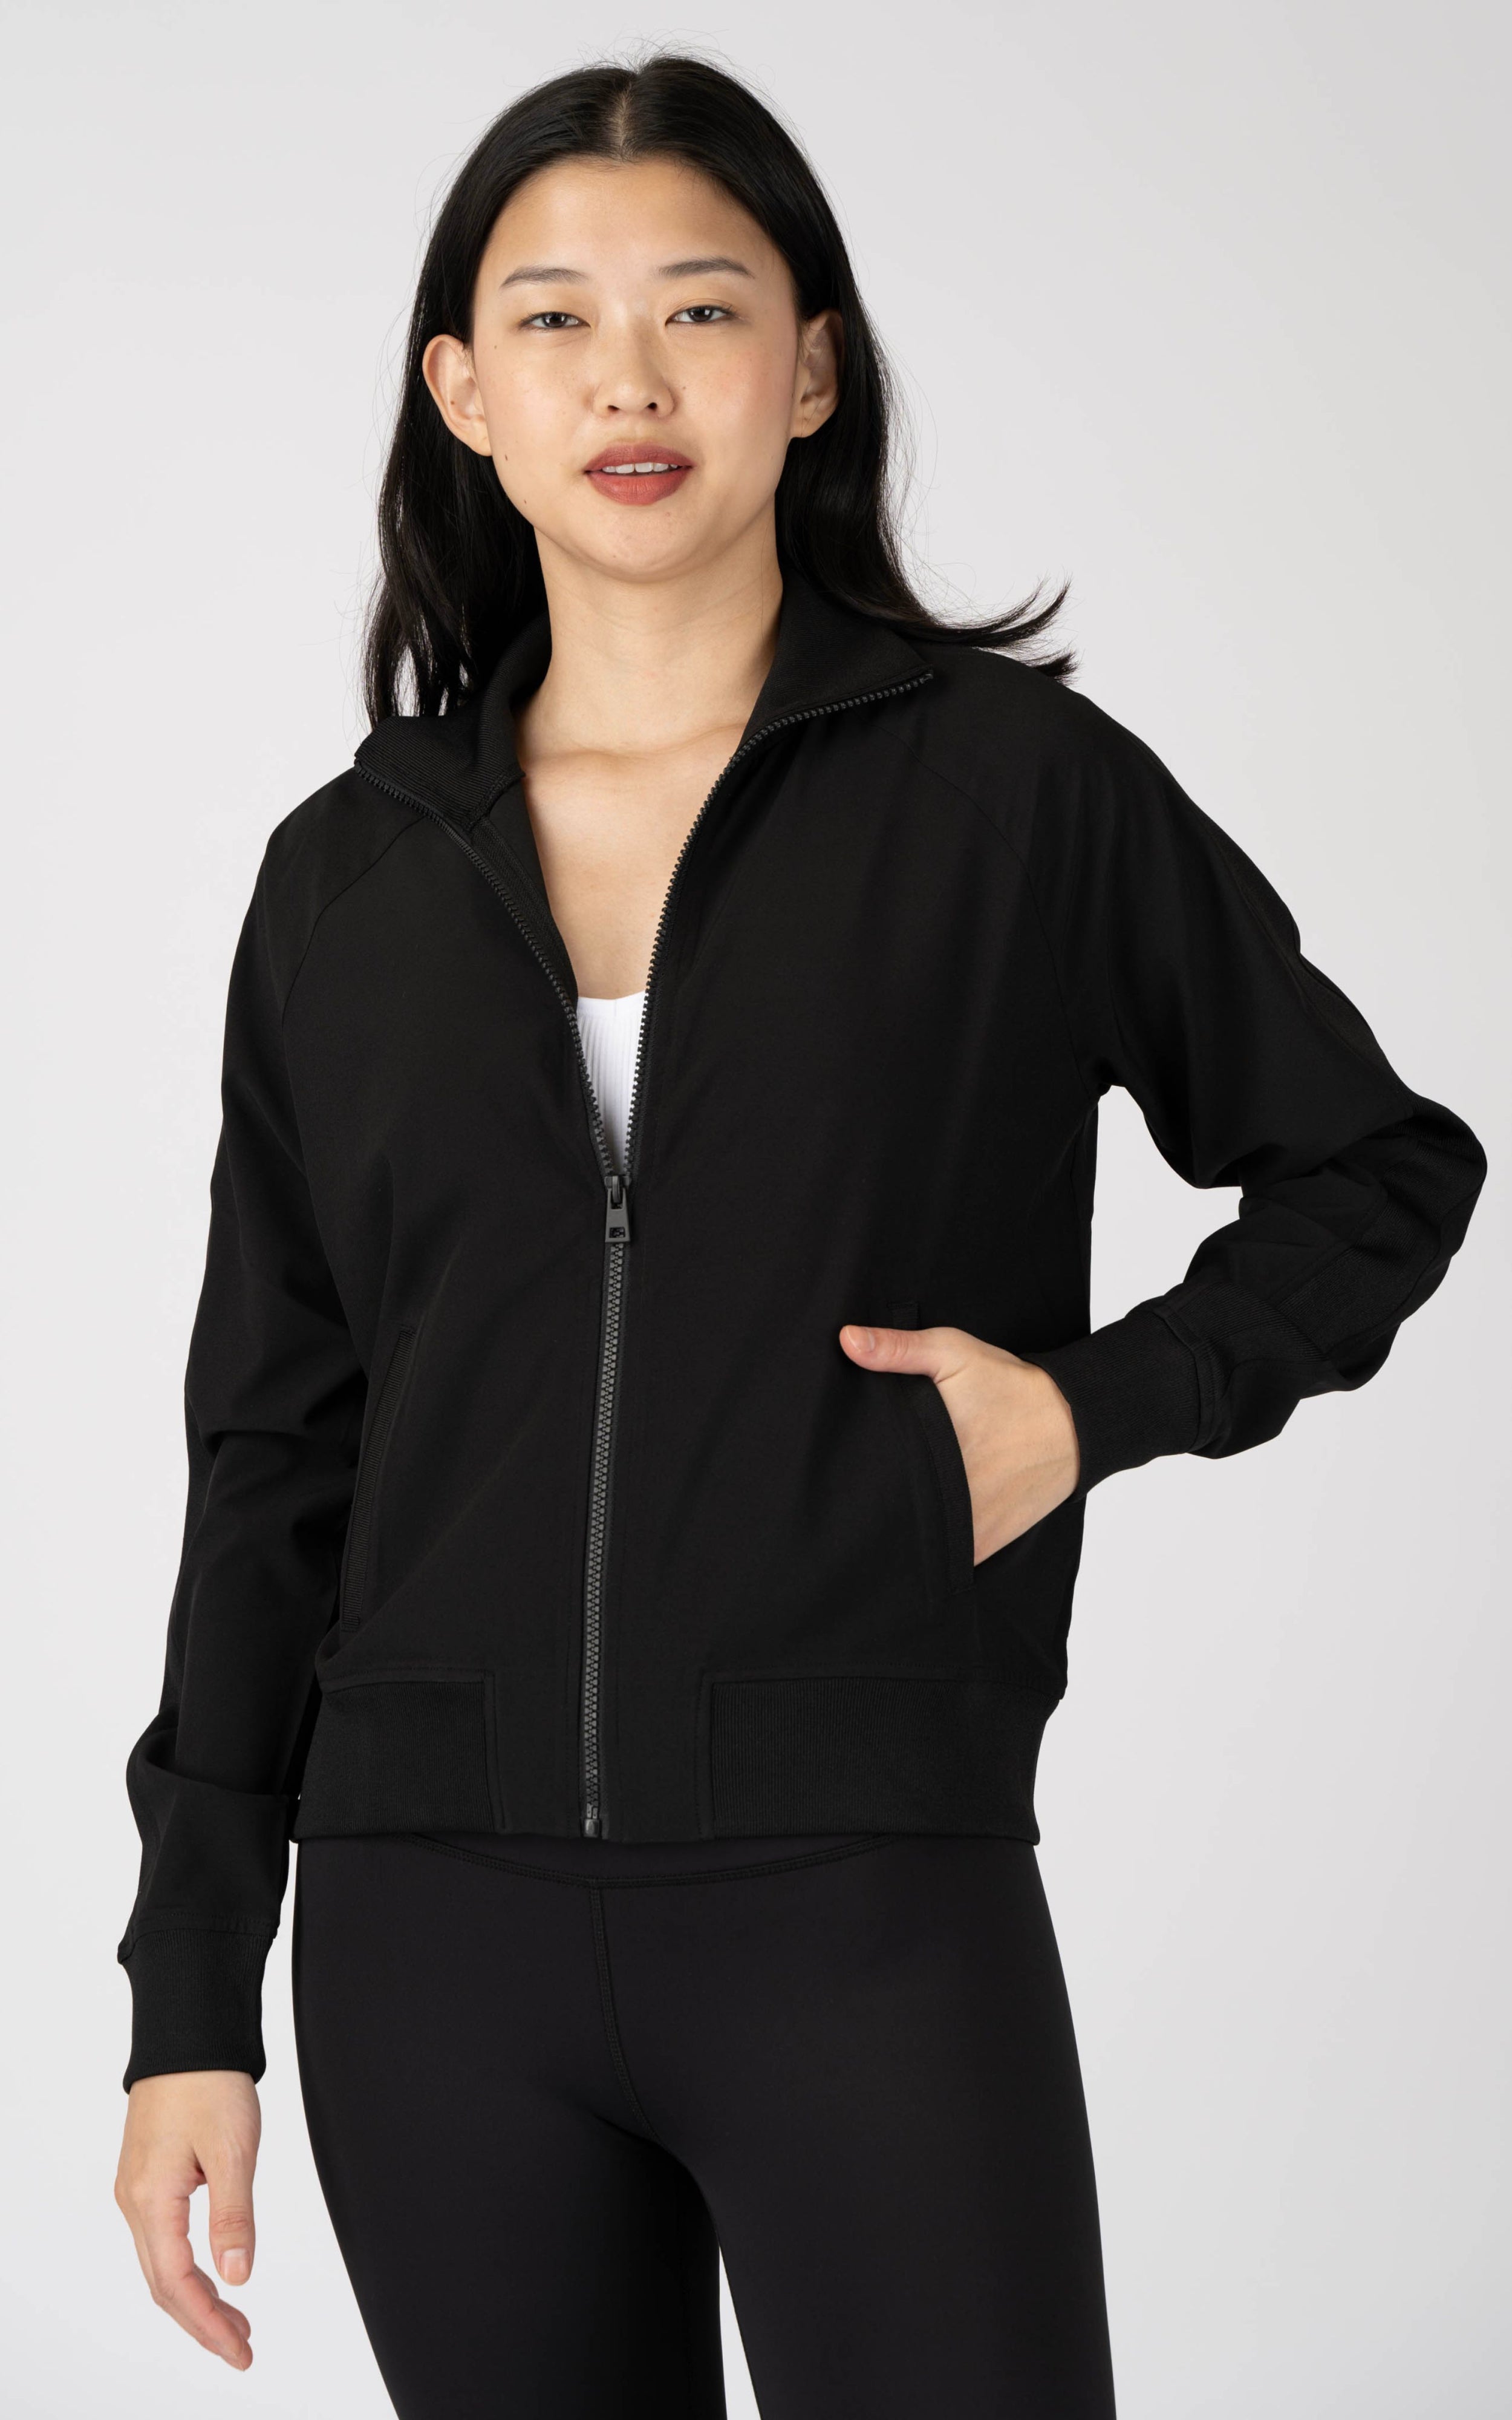 90 Degrees by Reflex Sports Jacket Black Size XS - $18 (77% Off